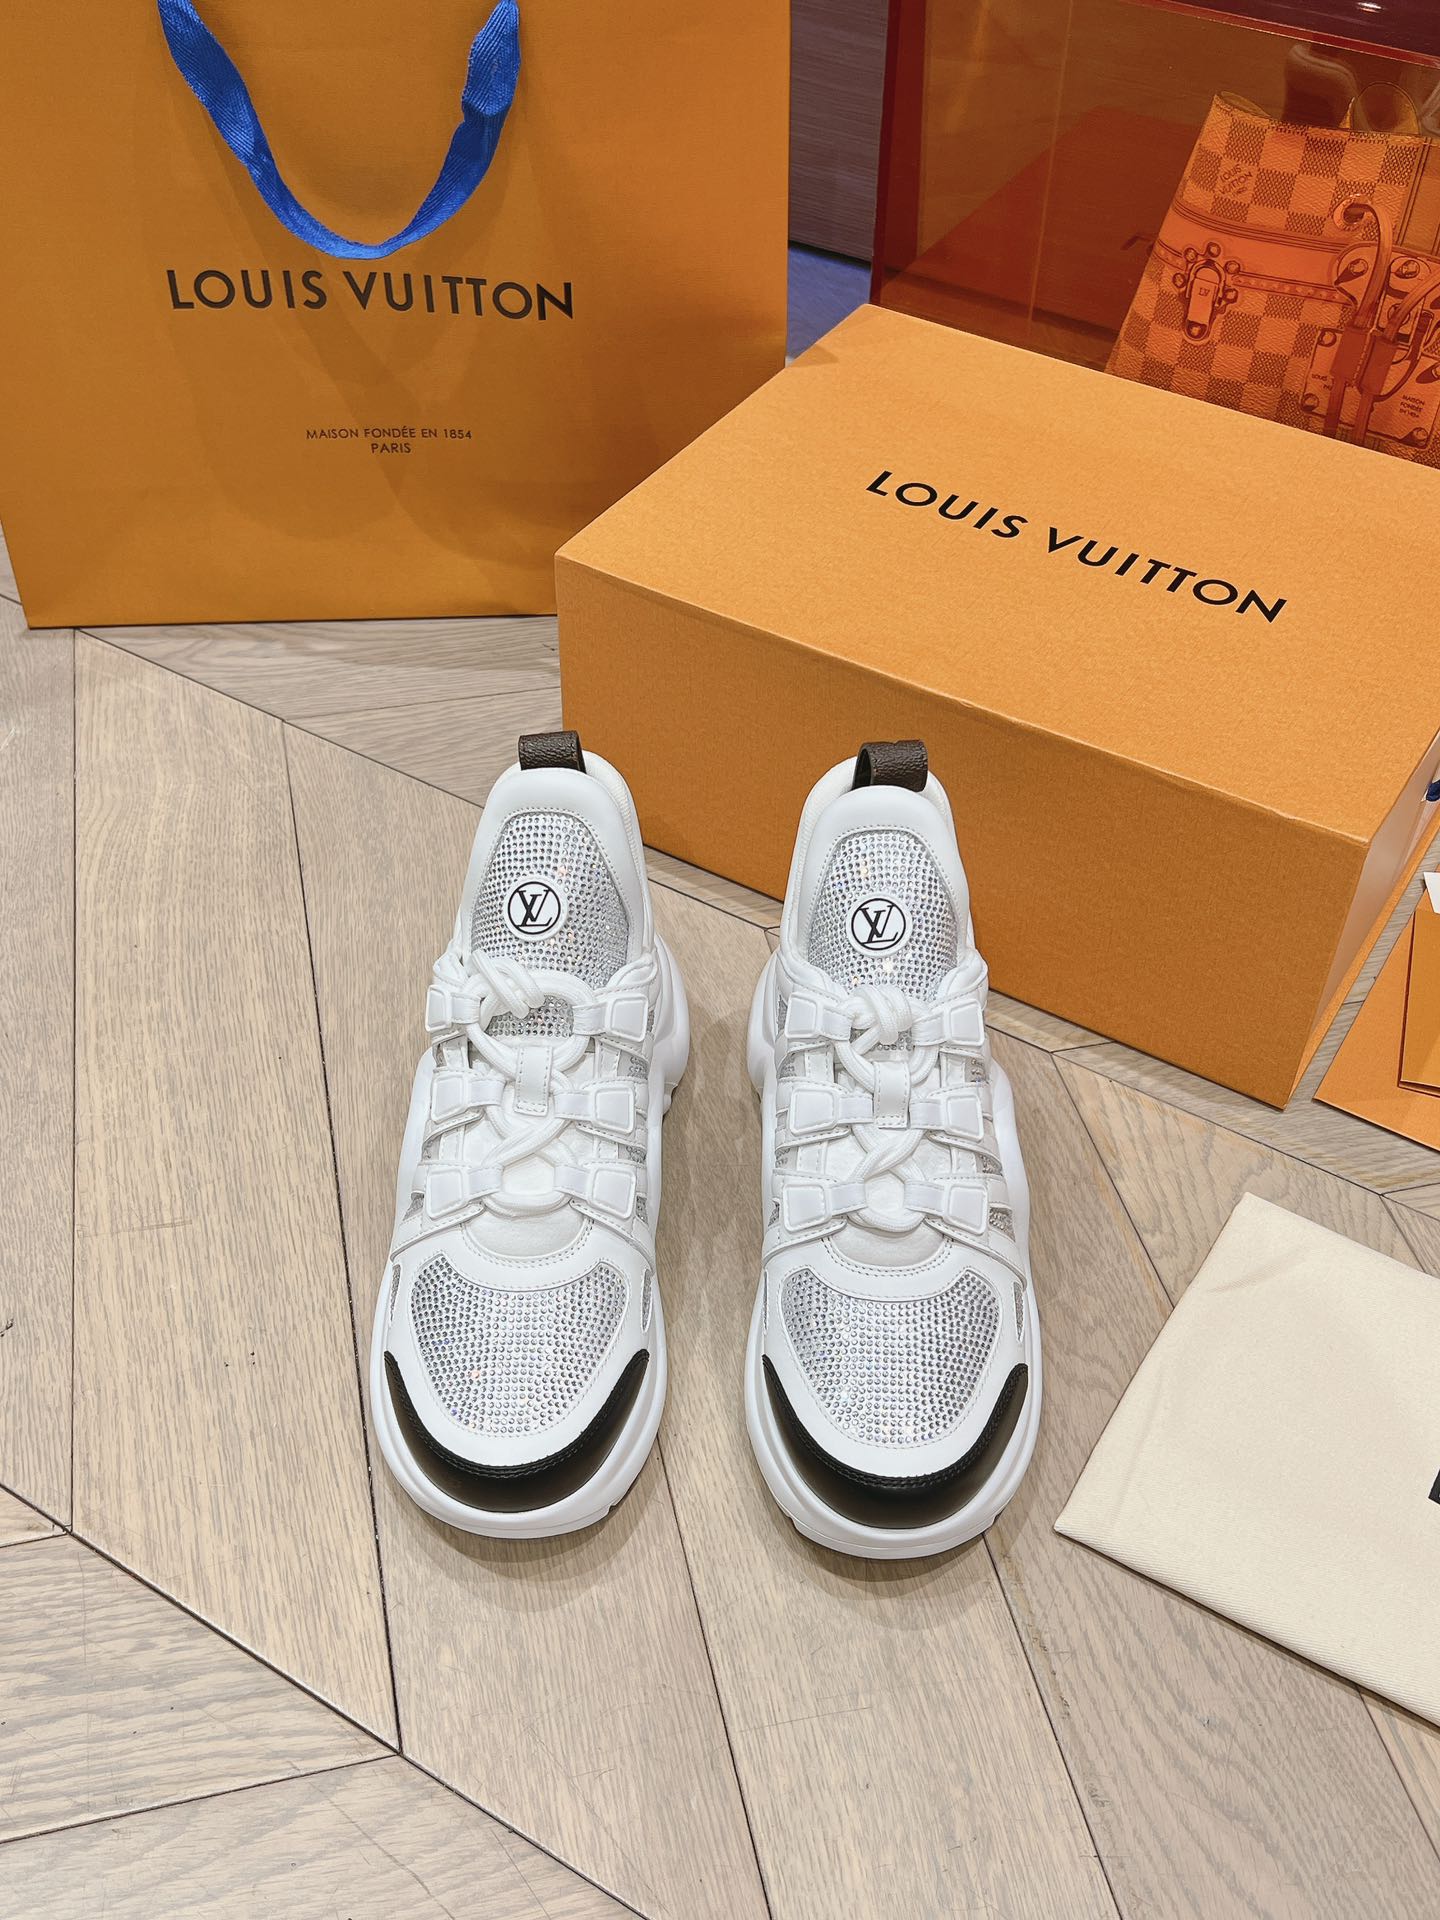 Louis Vuitton Schoenen Sportschoenen Vrouwen Zomercollectie